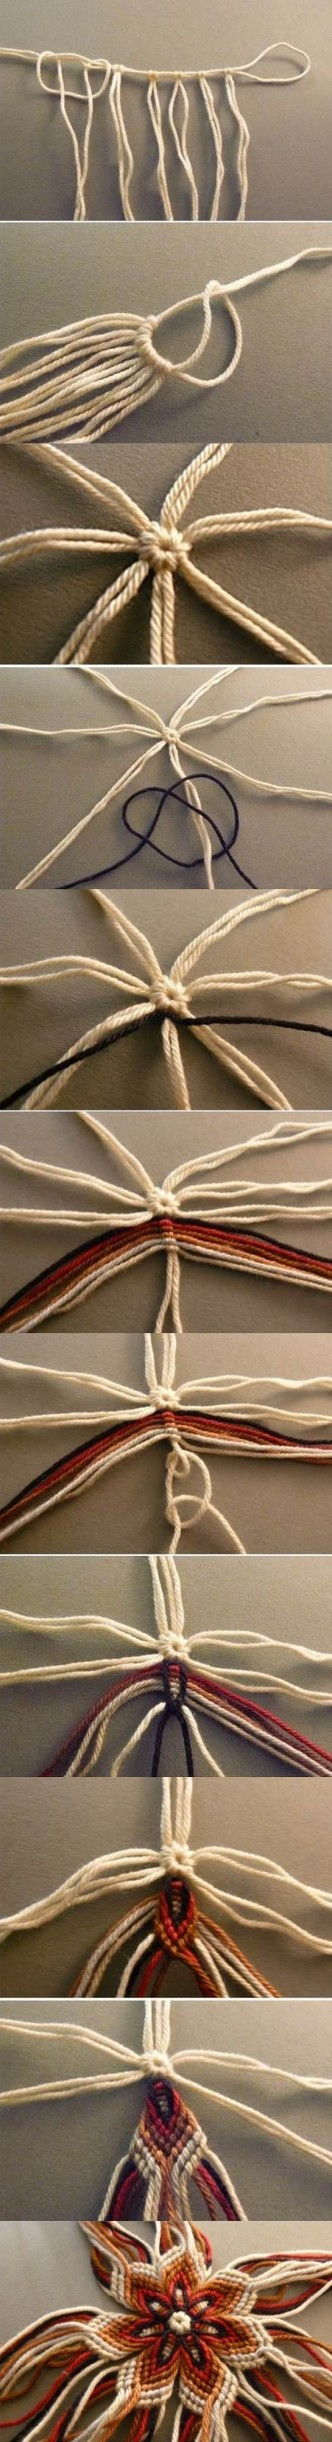 DIY No-Knit Weaving Flower of Yarn